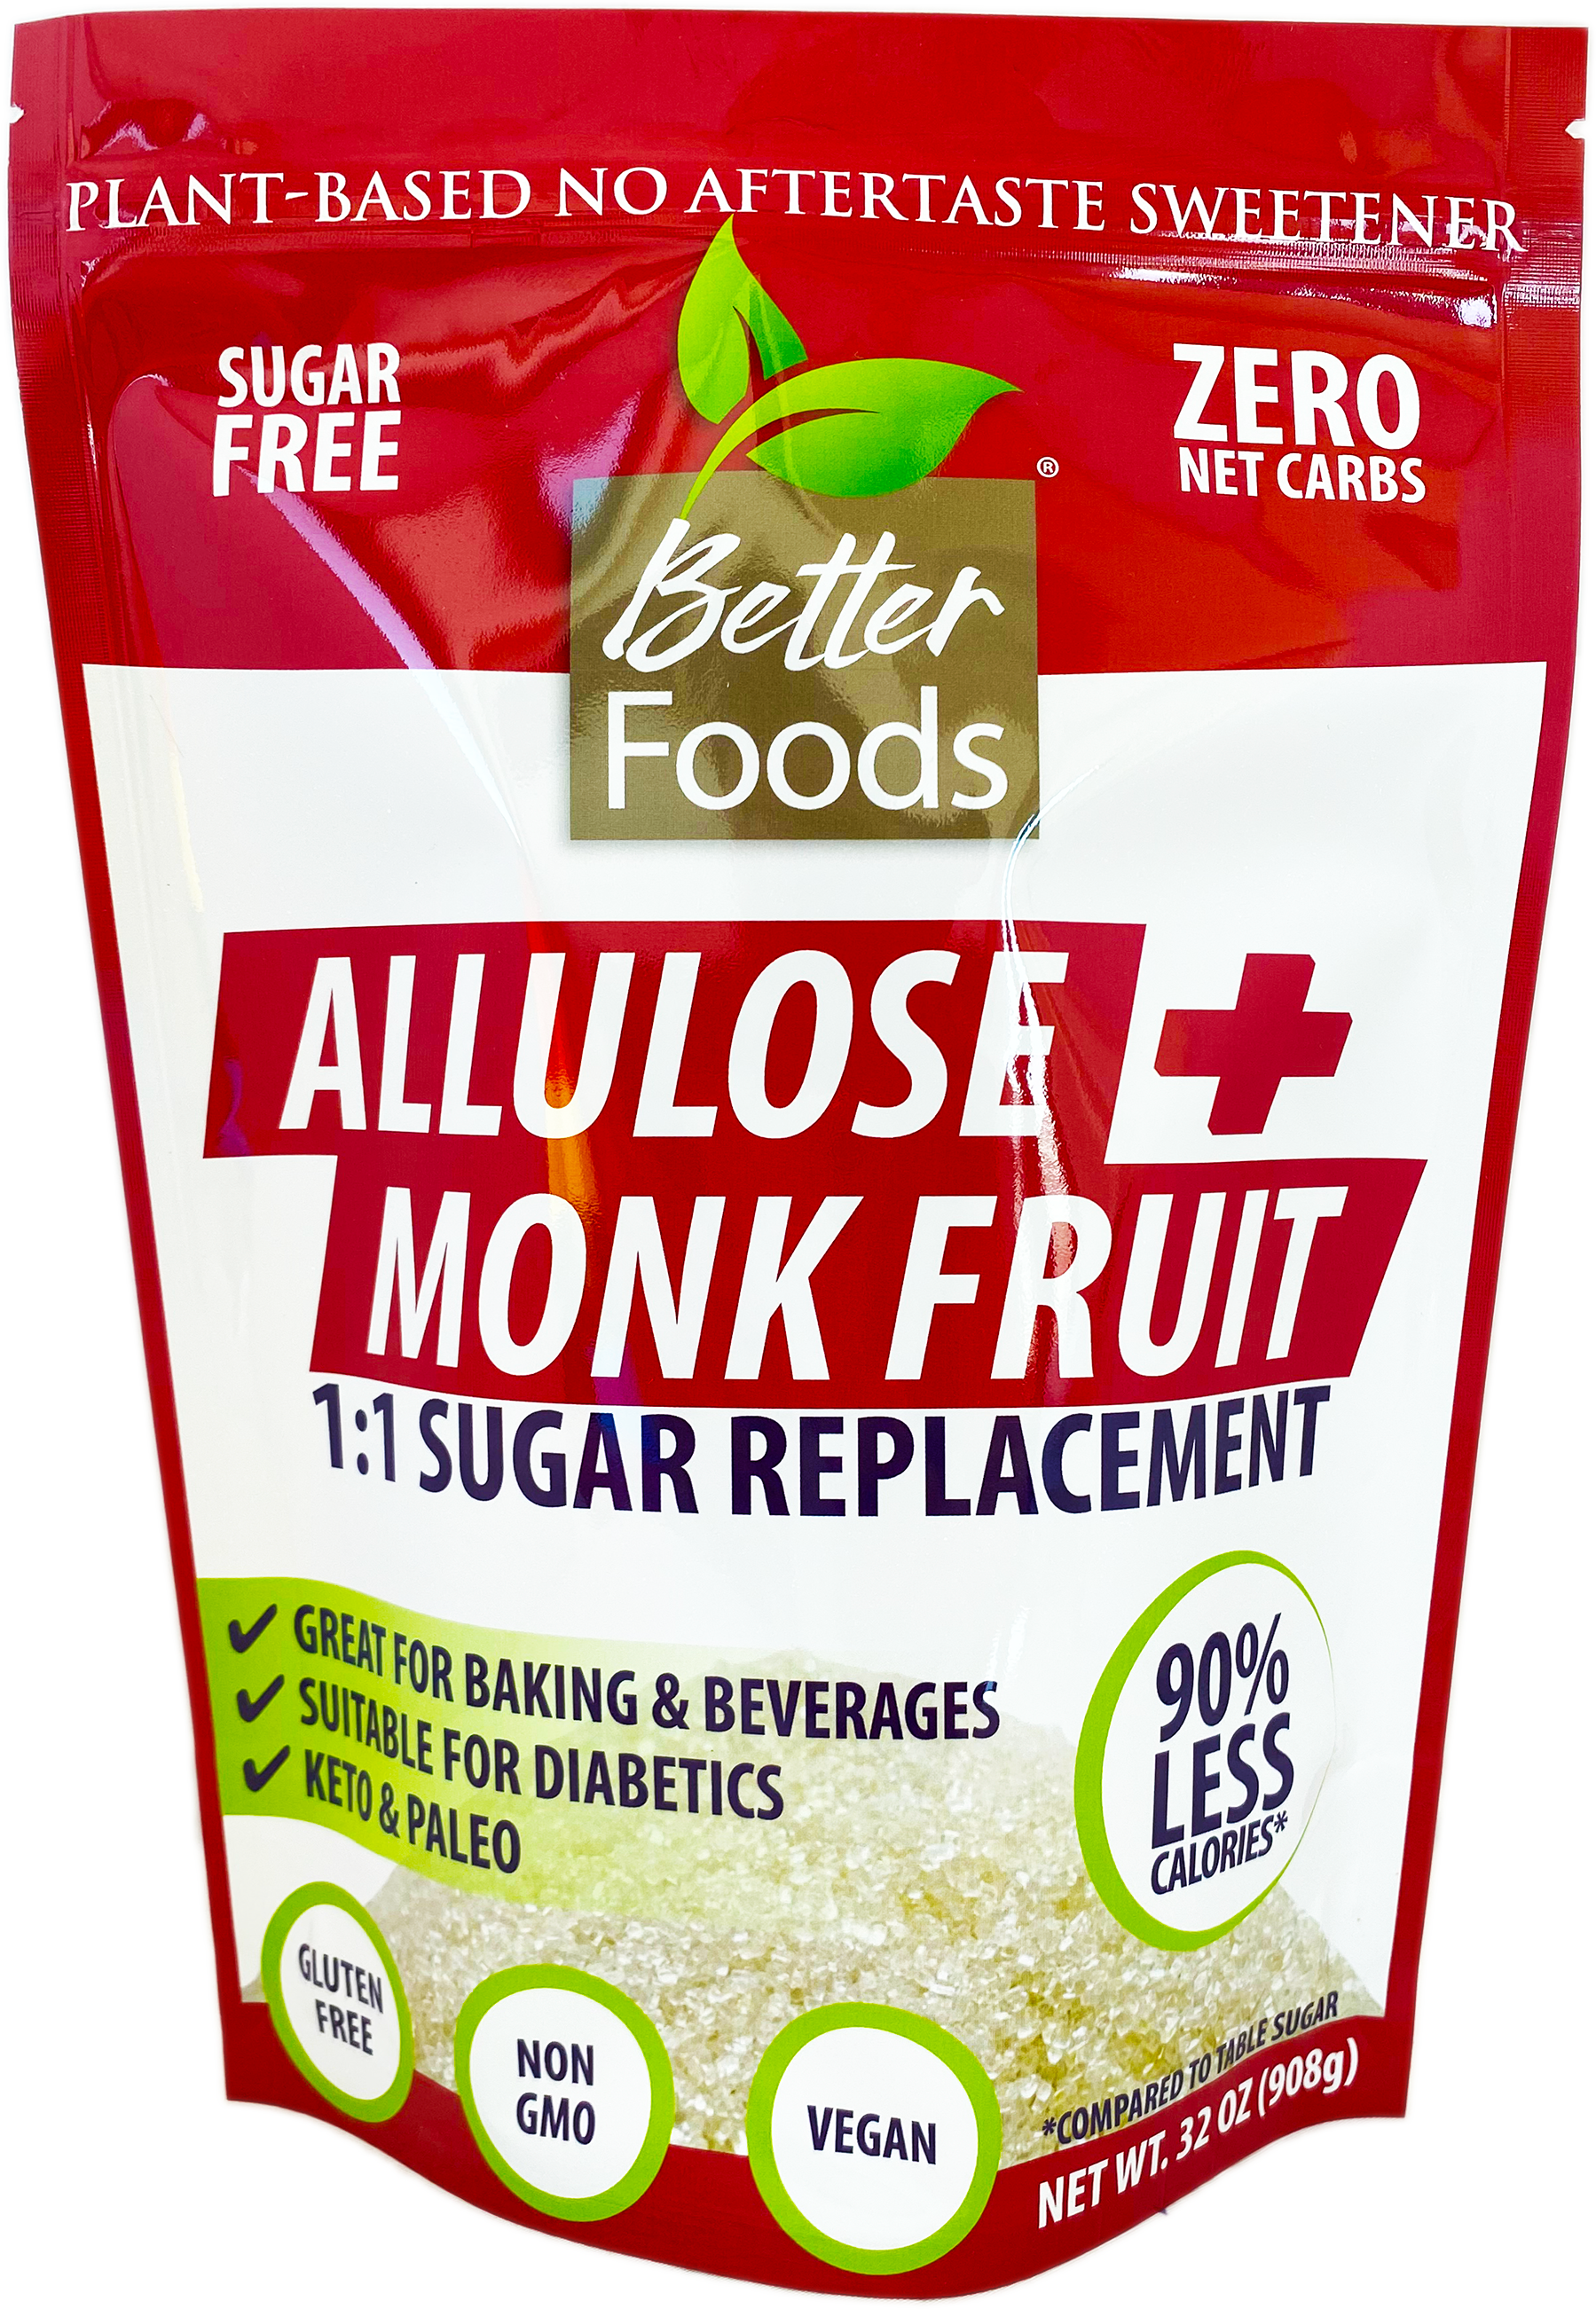 Allulose + Monk Fruit ZERO Calorie Sugar